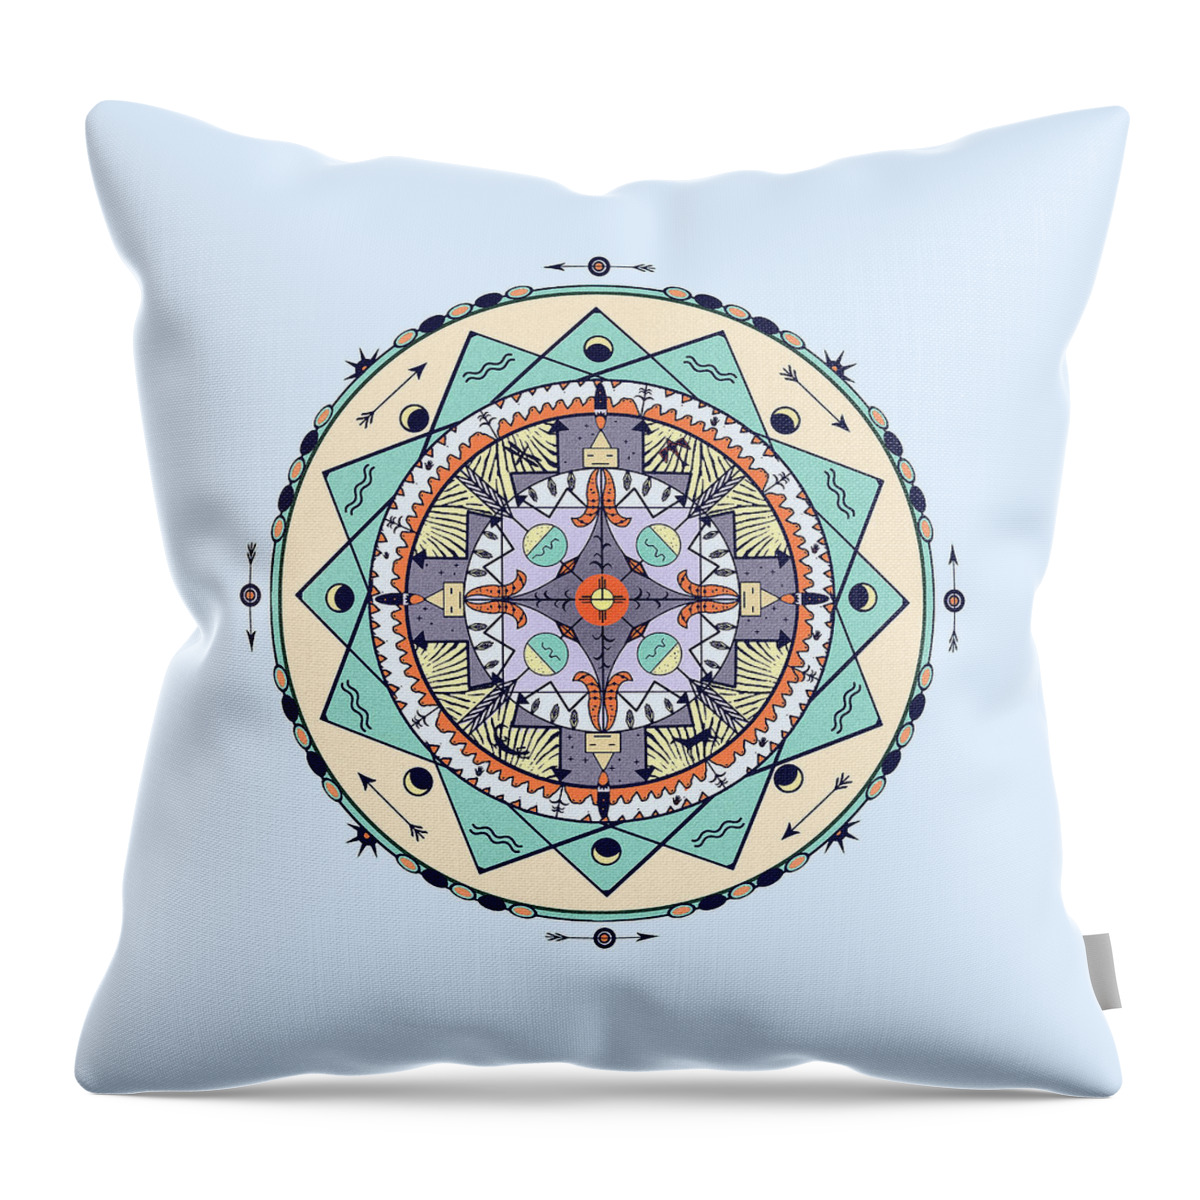 Pastel Throw Pillow featuring the digital art Native Symbols Mandala by Deborah Smith